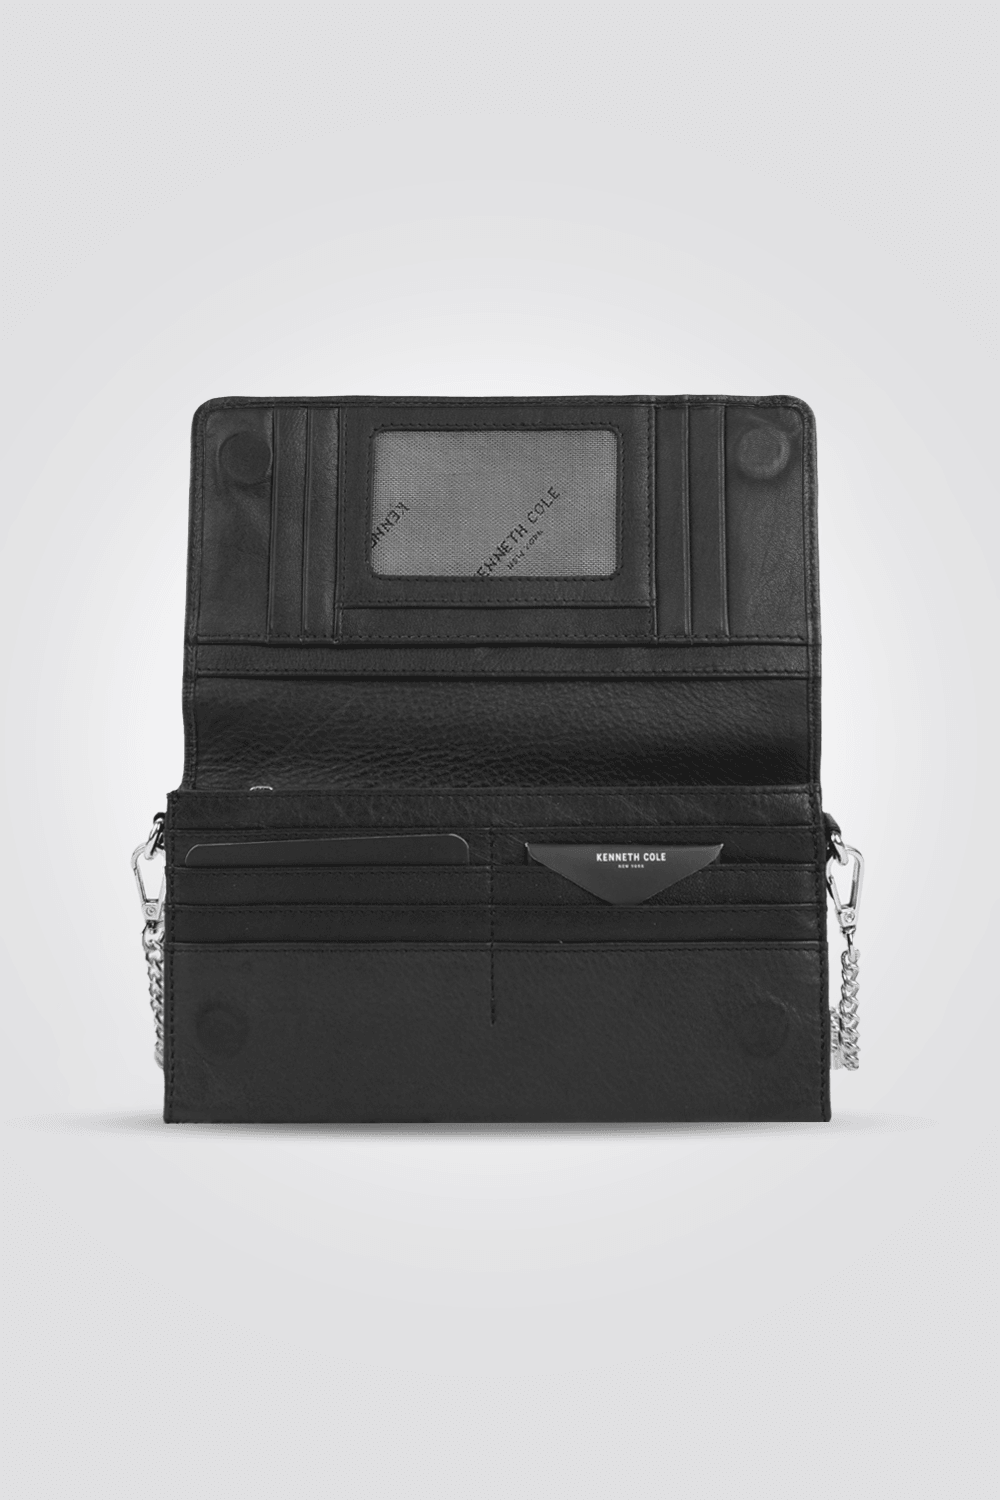 KENNETH COLE - תיק עור קרוס בצבע שחור שרשרת כסף - MASHBIR//365